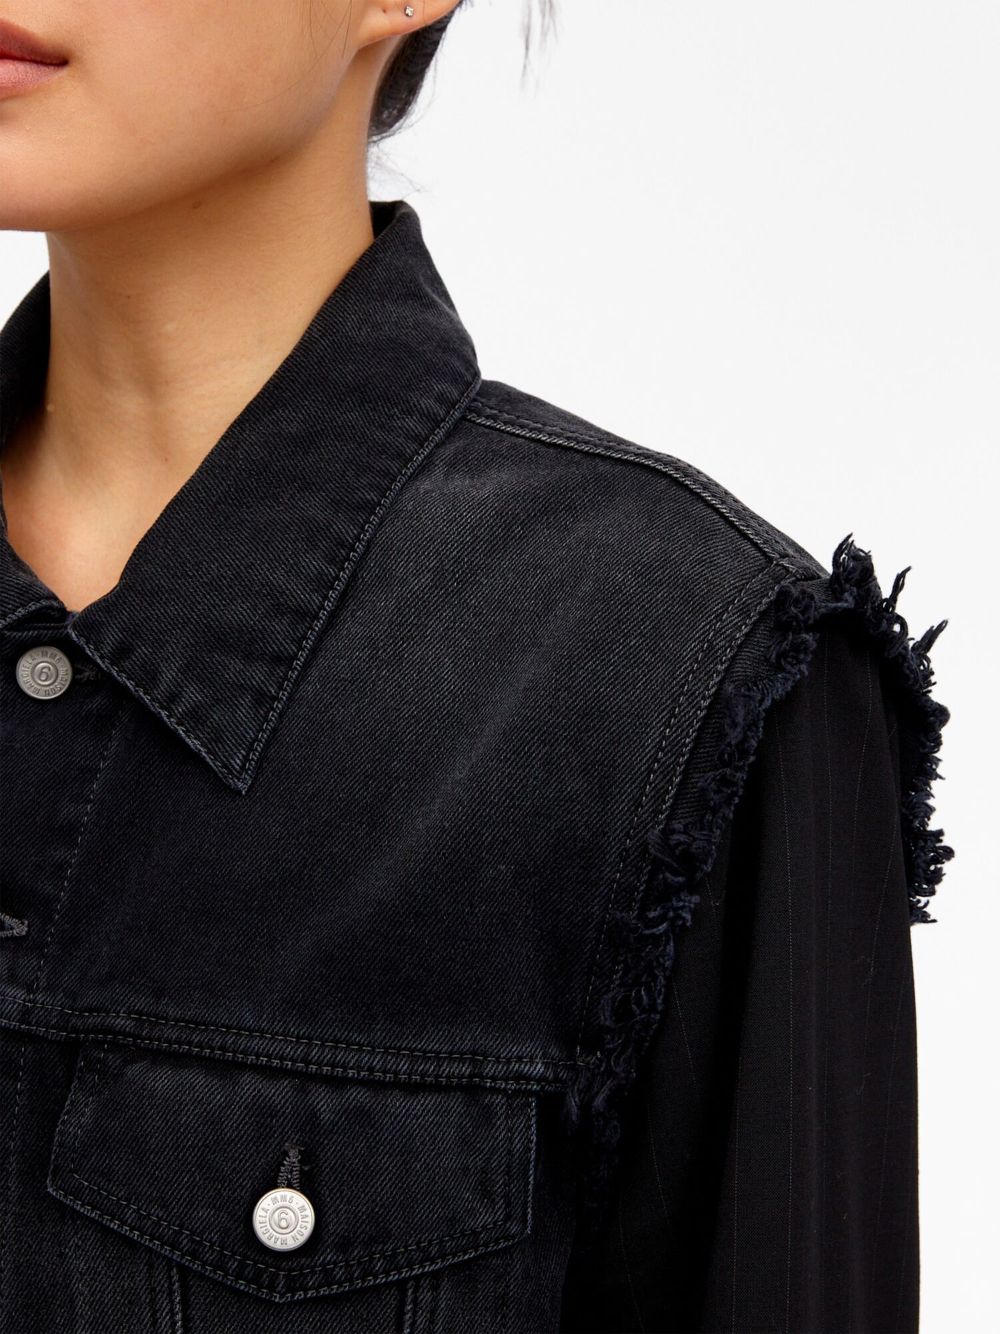 MM6 MAISON MARGIELA Ripped-Detailing Denim Jacket for Women in Black